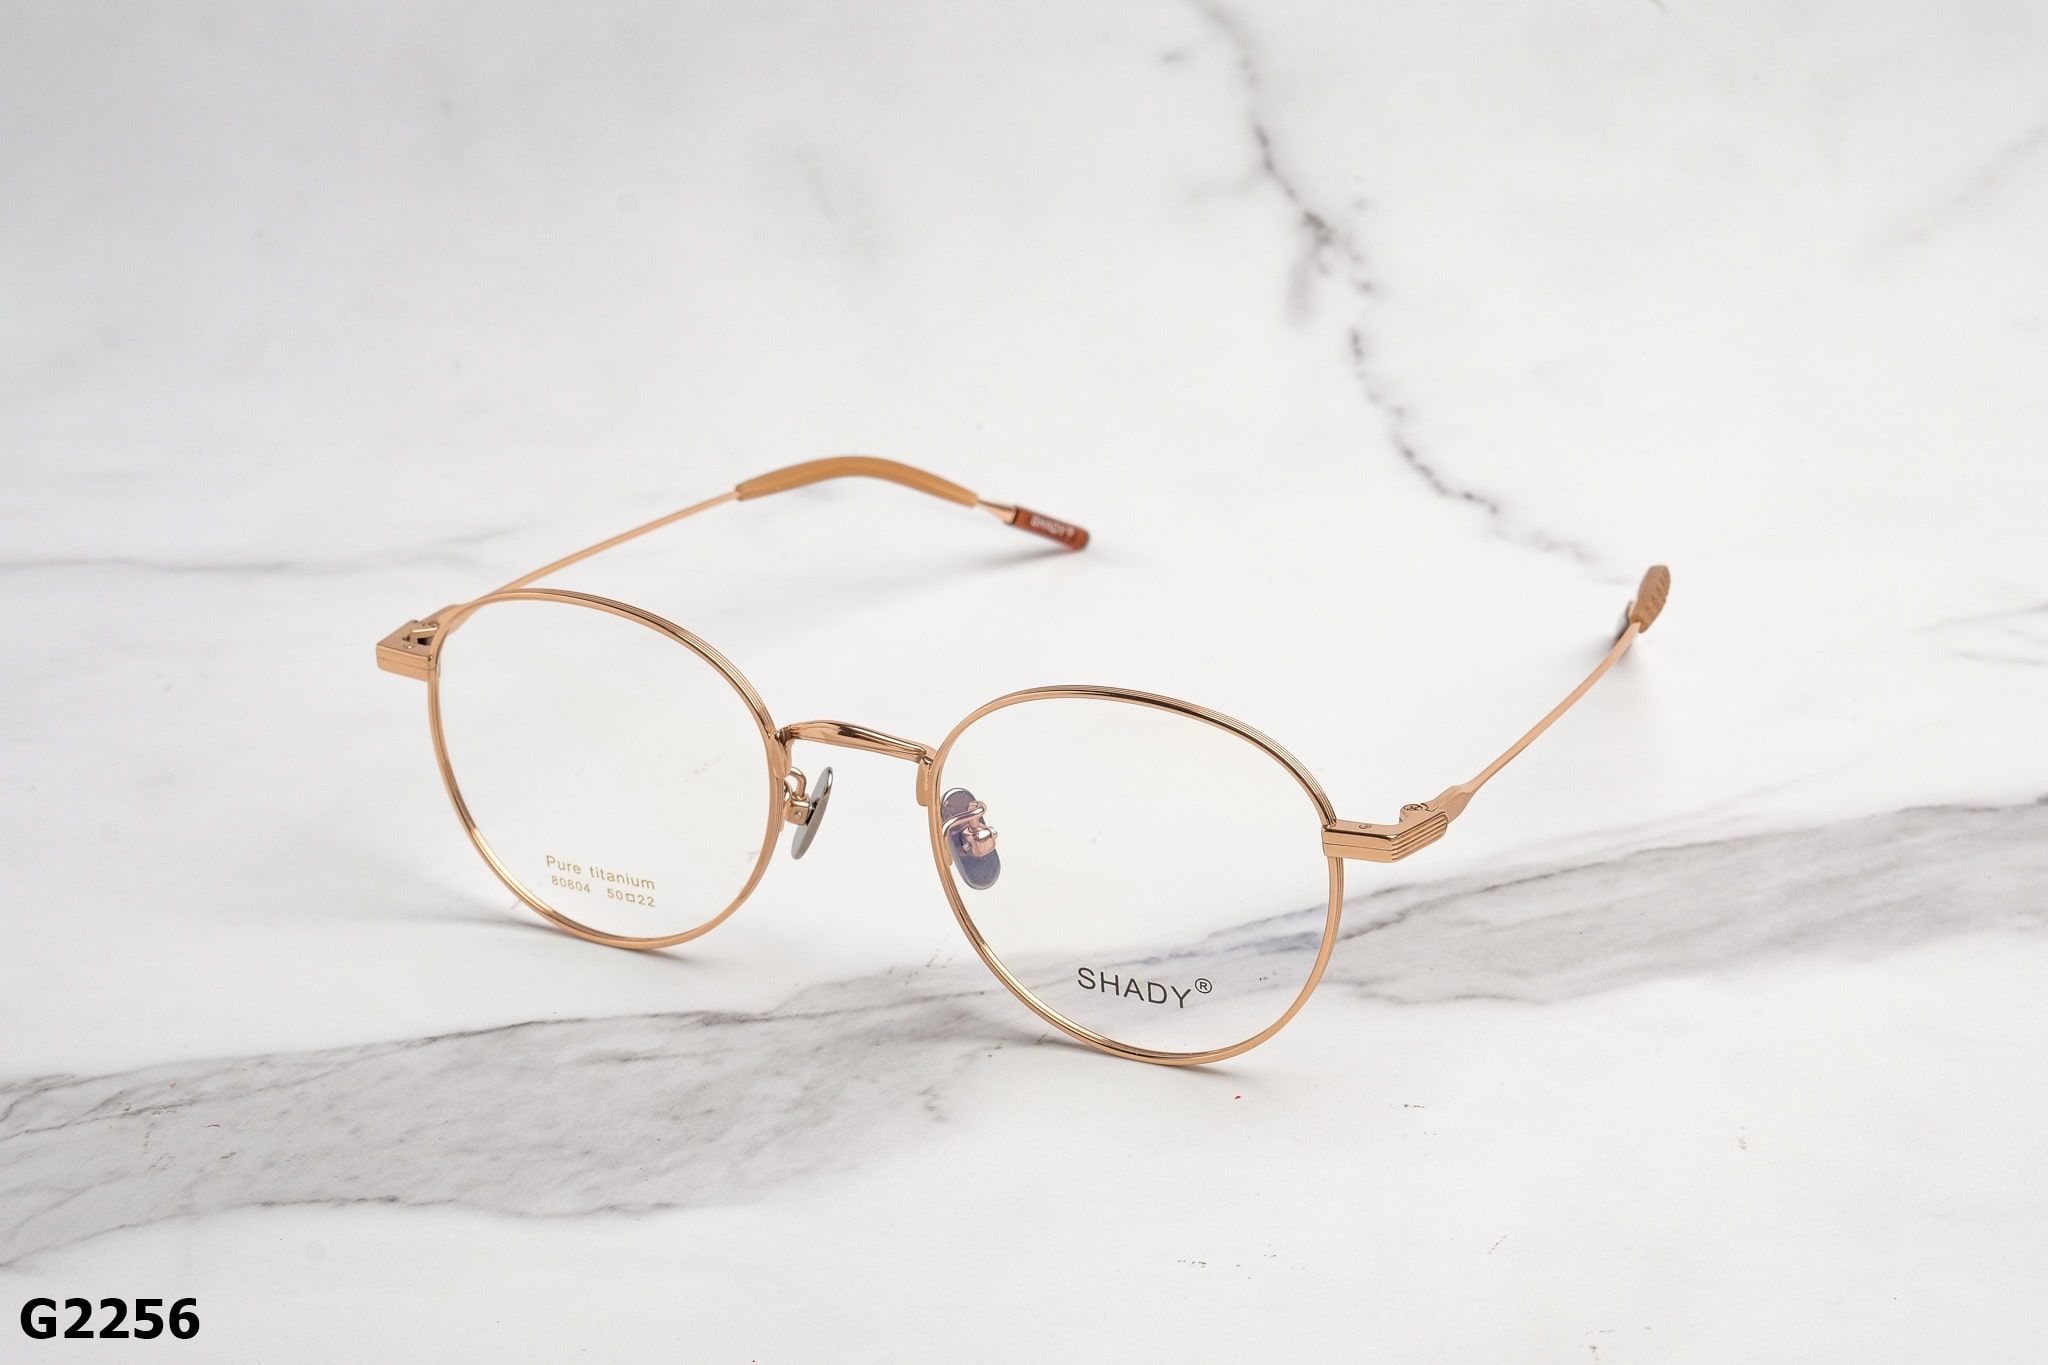  SHADY Eyewear - Glasses - G2256 